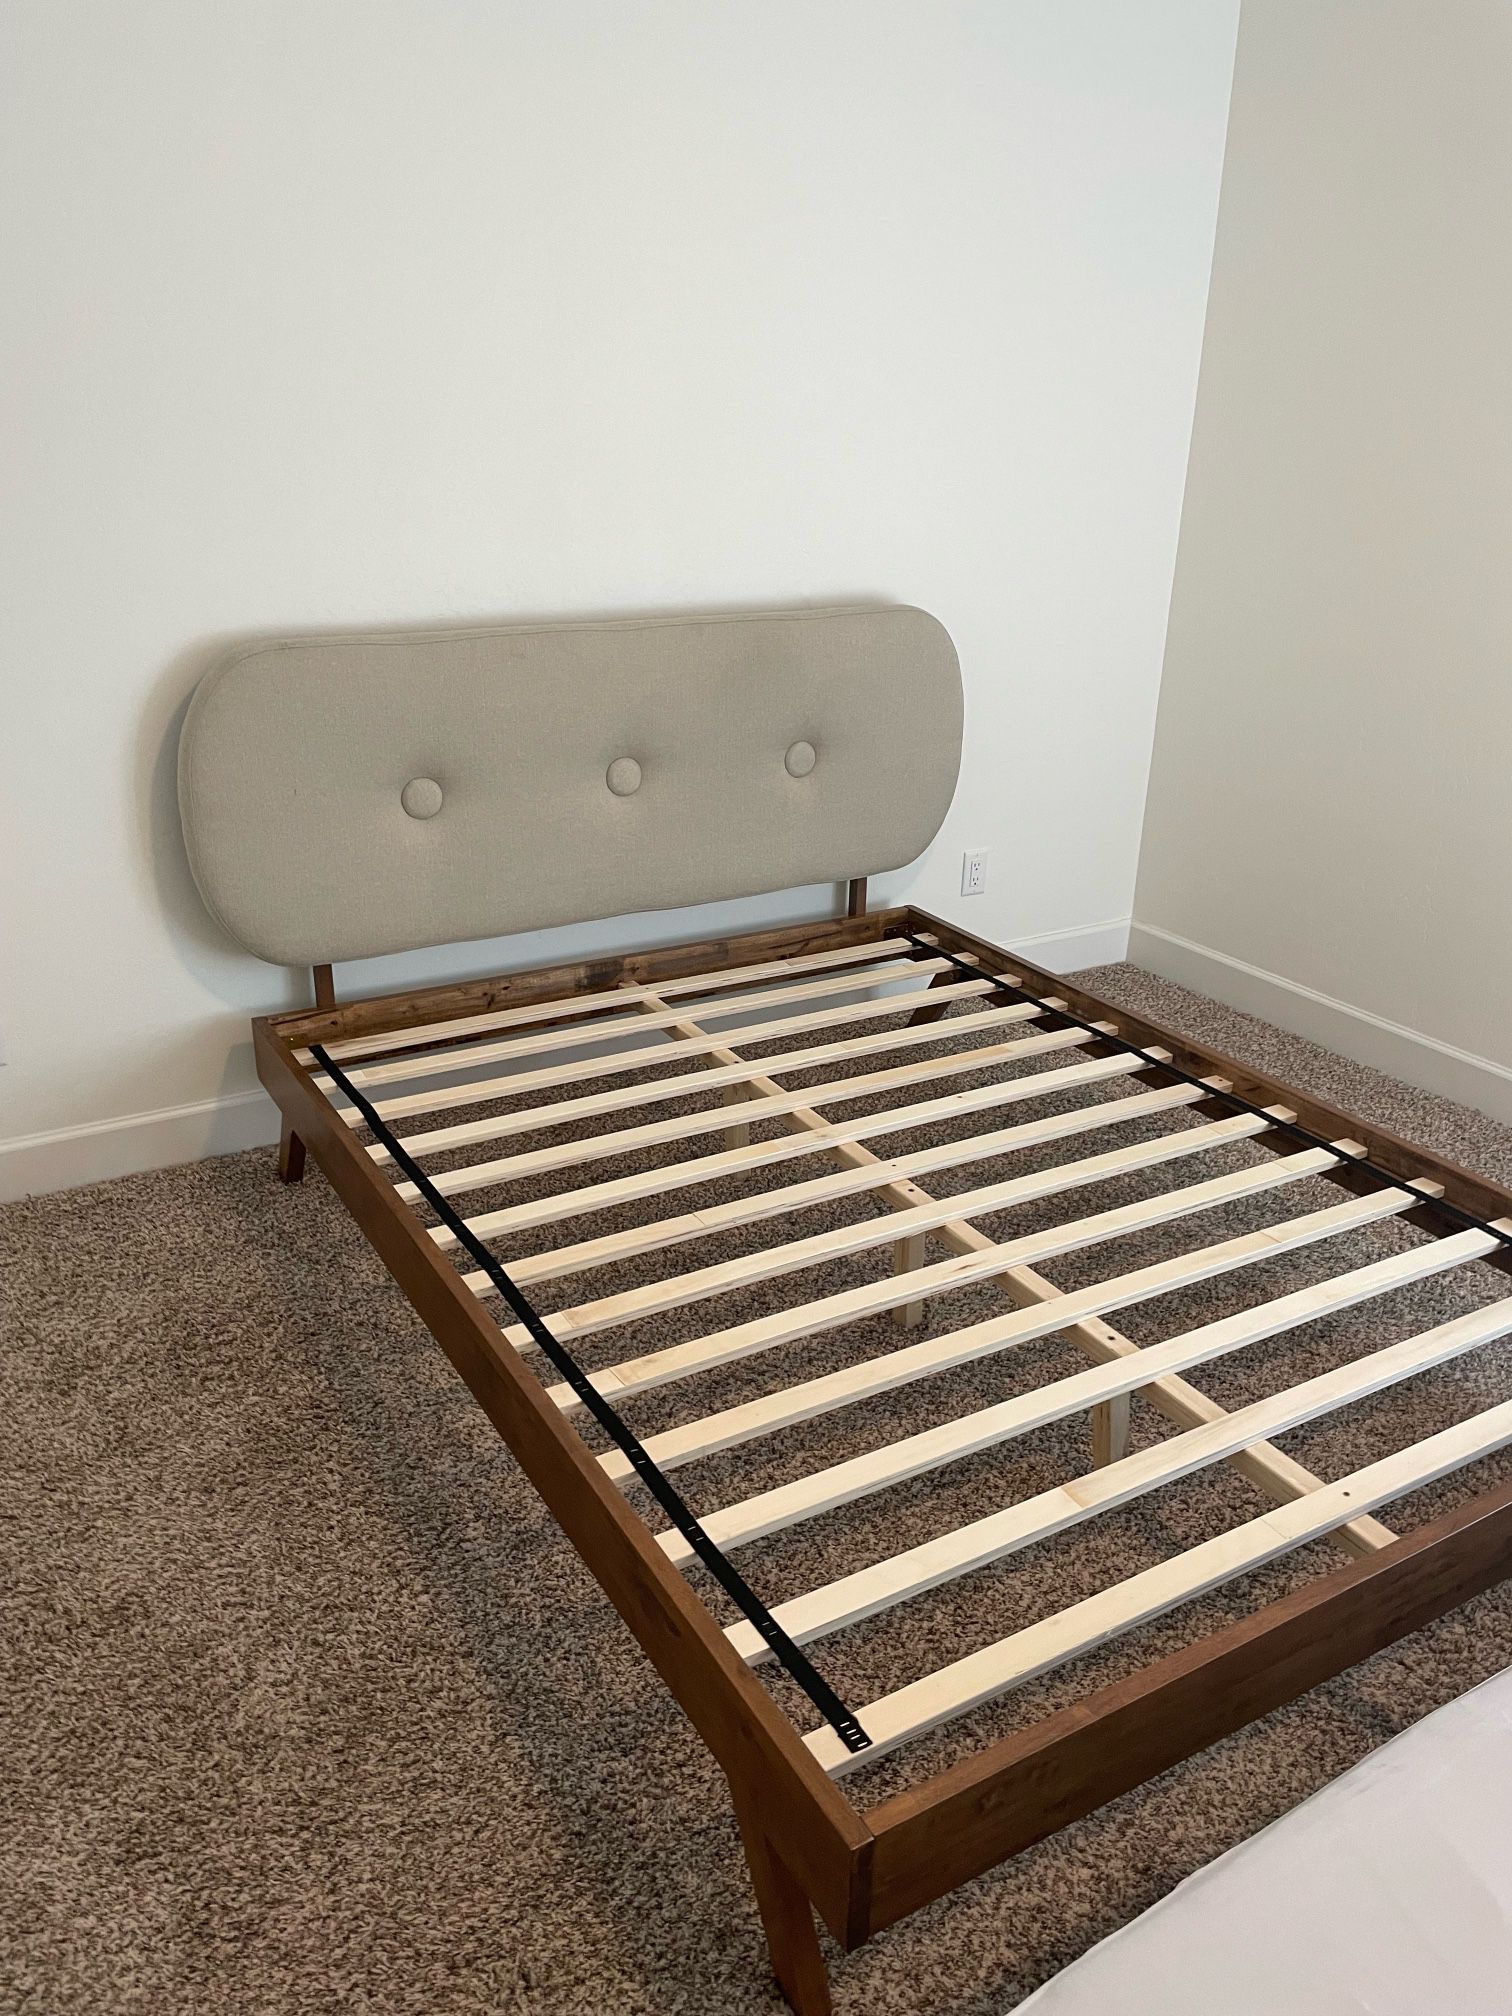 Bed frame - Queen (missing Hardware)